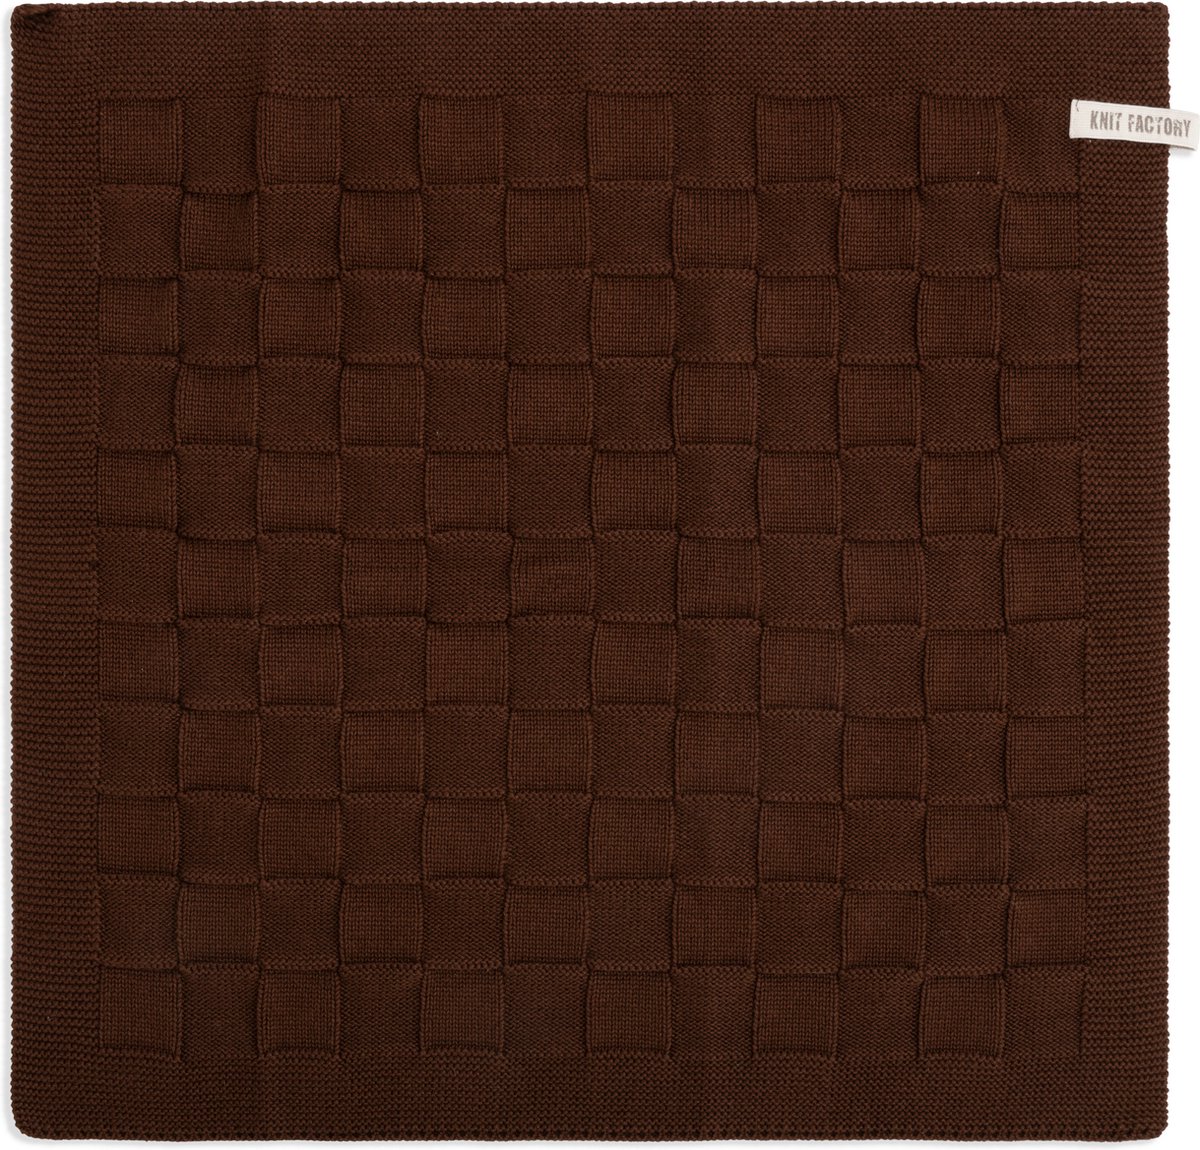 Knit Factory Gebreide Keukendoek - Keukenhanddoek Uni - Handdoek - Vaatdoek - Keuken doek - Chocolate - Donkerbruin - 50x50 cm